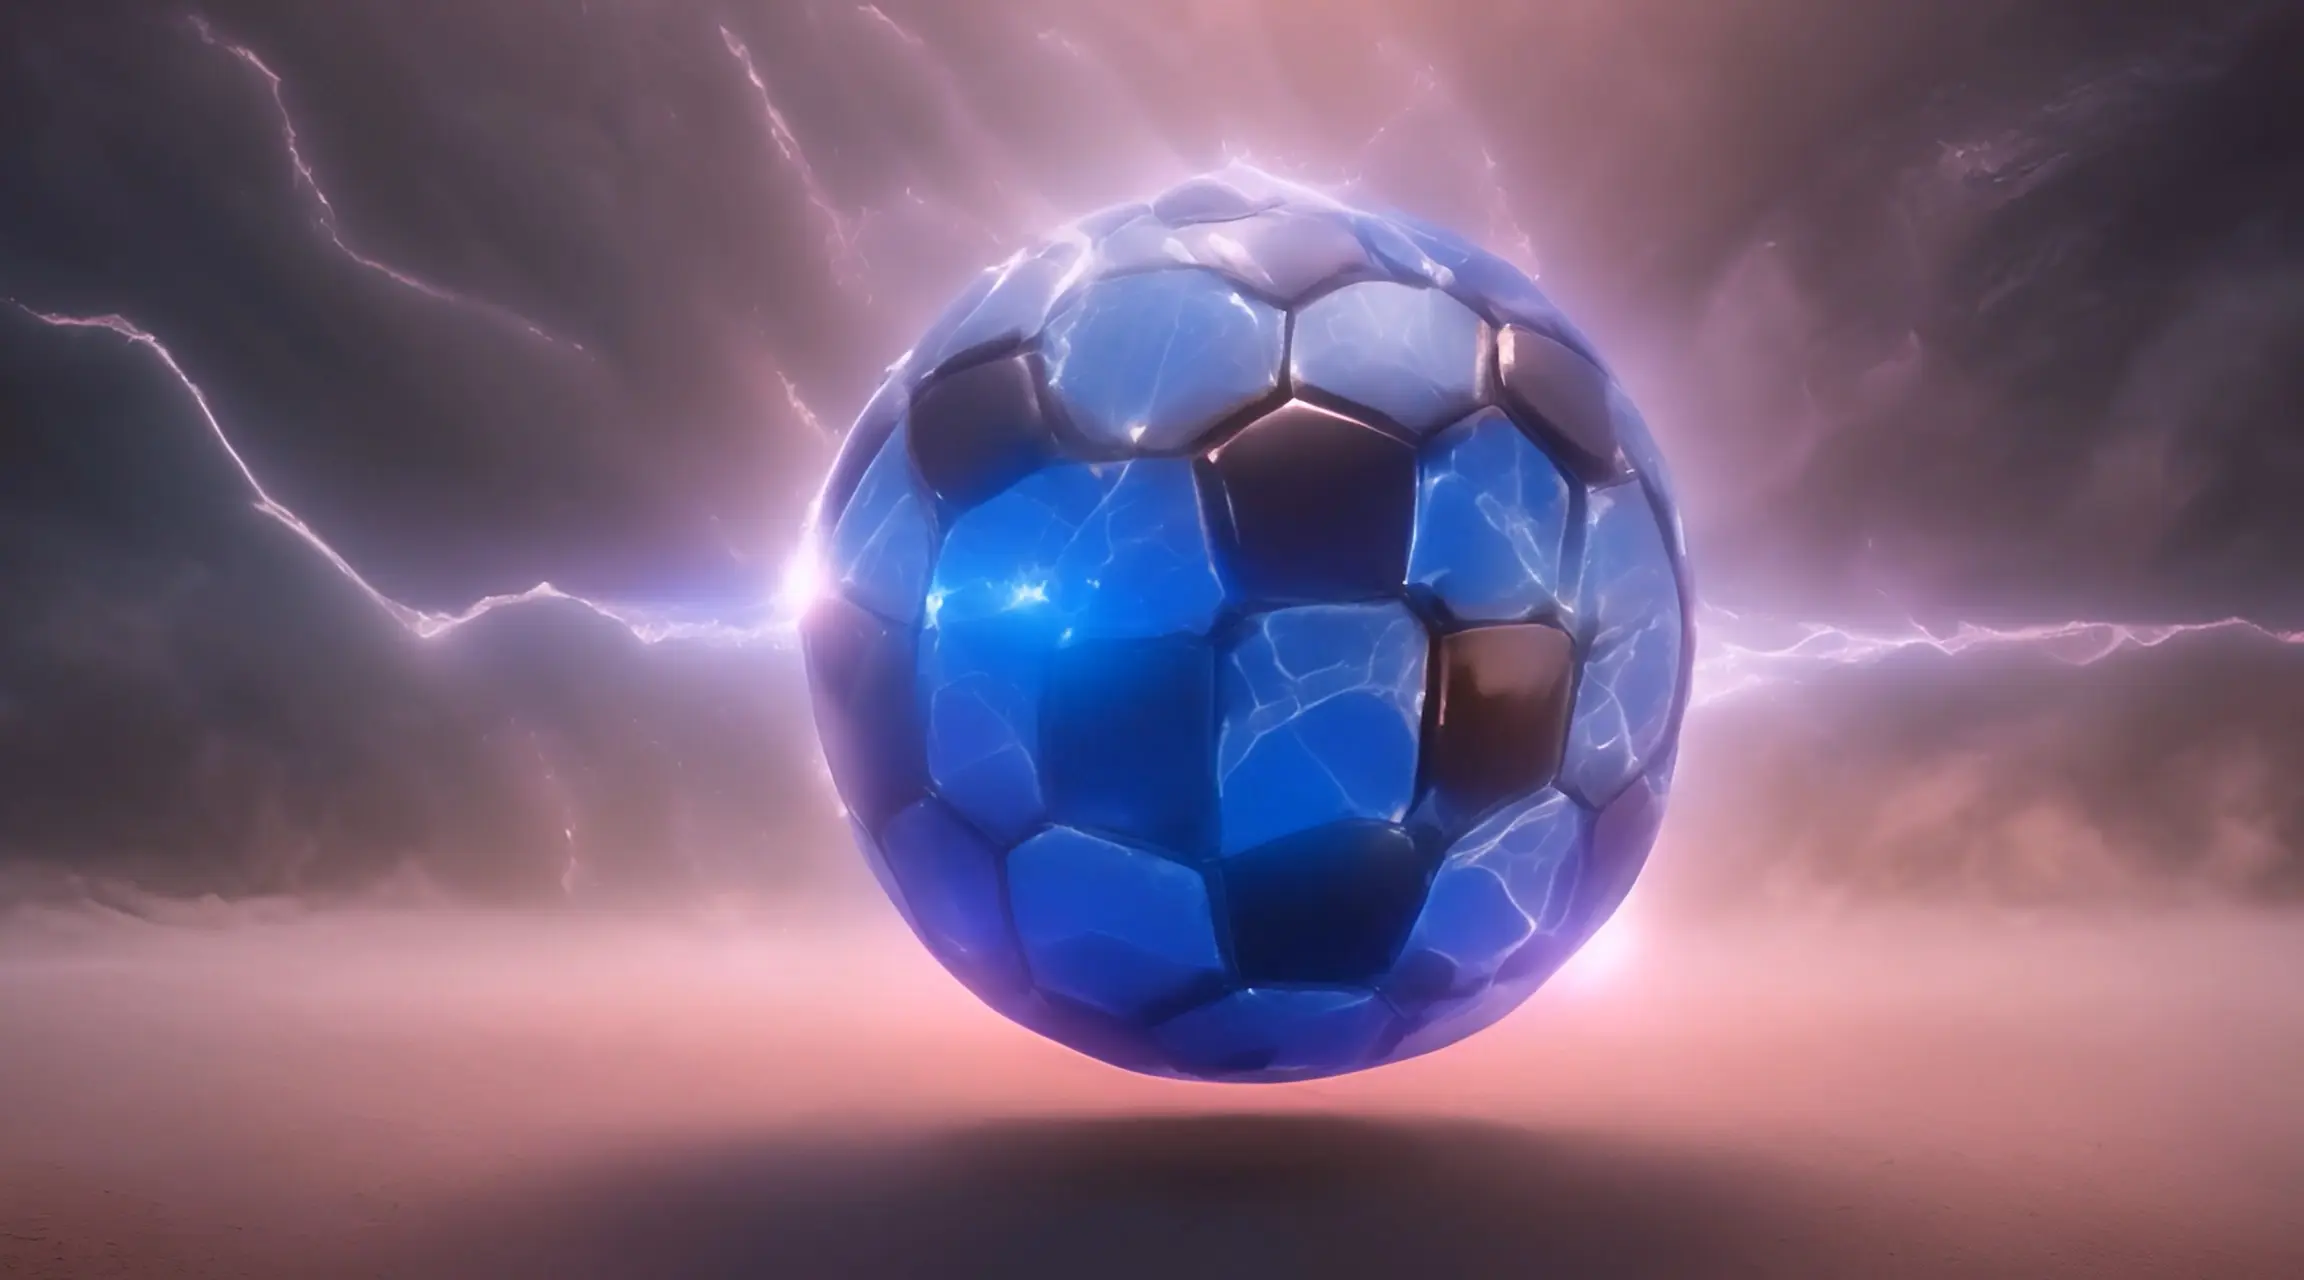 Electrified Soccer Ball Energy Burst